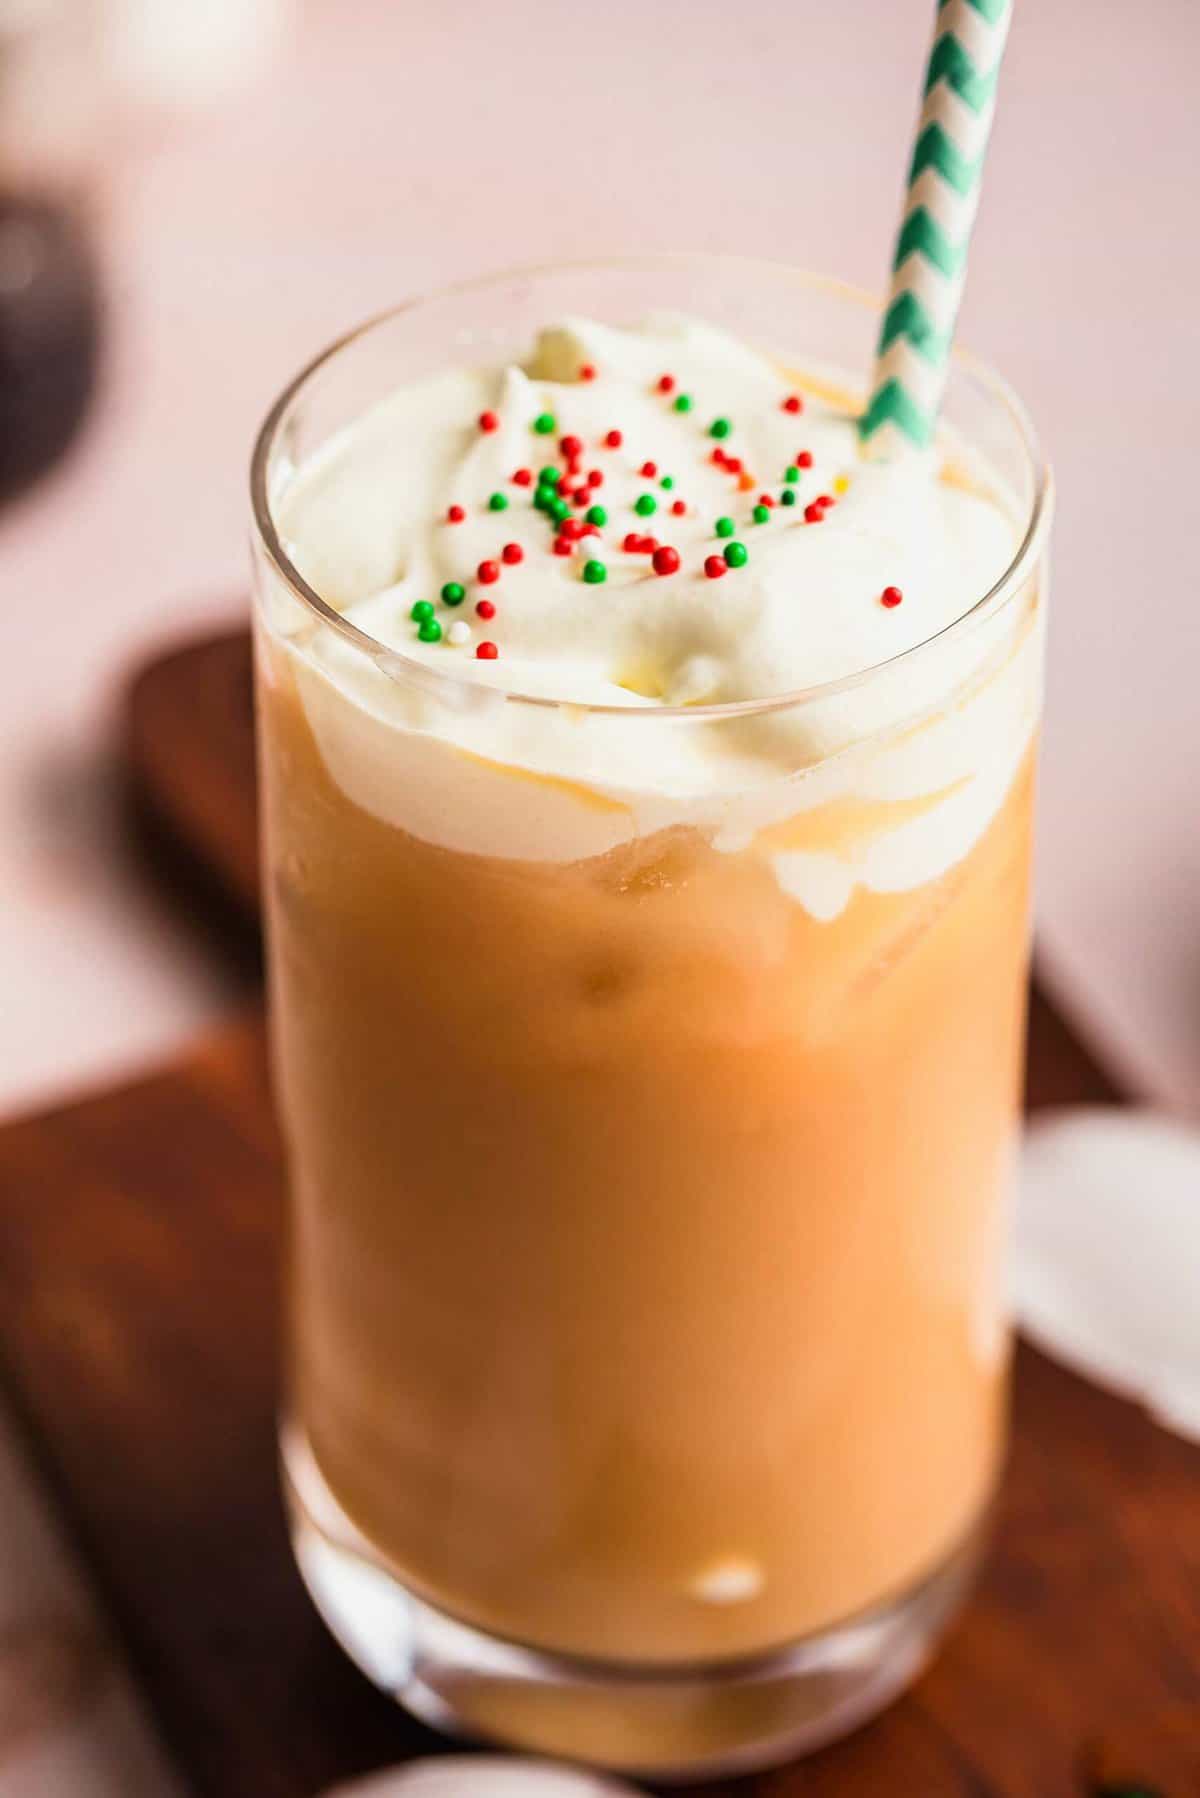 https://www.tablefortwoblog.com/wp-content/uploads/2021/12/sugar-cookie-latte-recipe-photo-tablefortwoblog-3-scaled.jpg